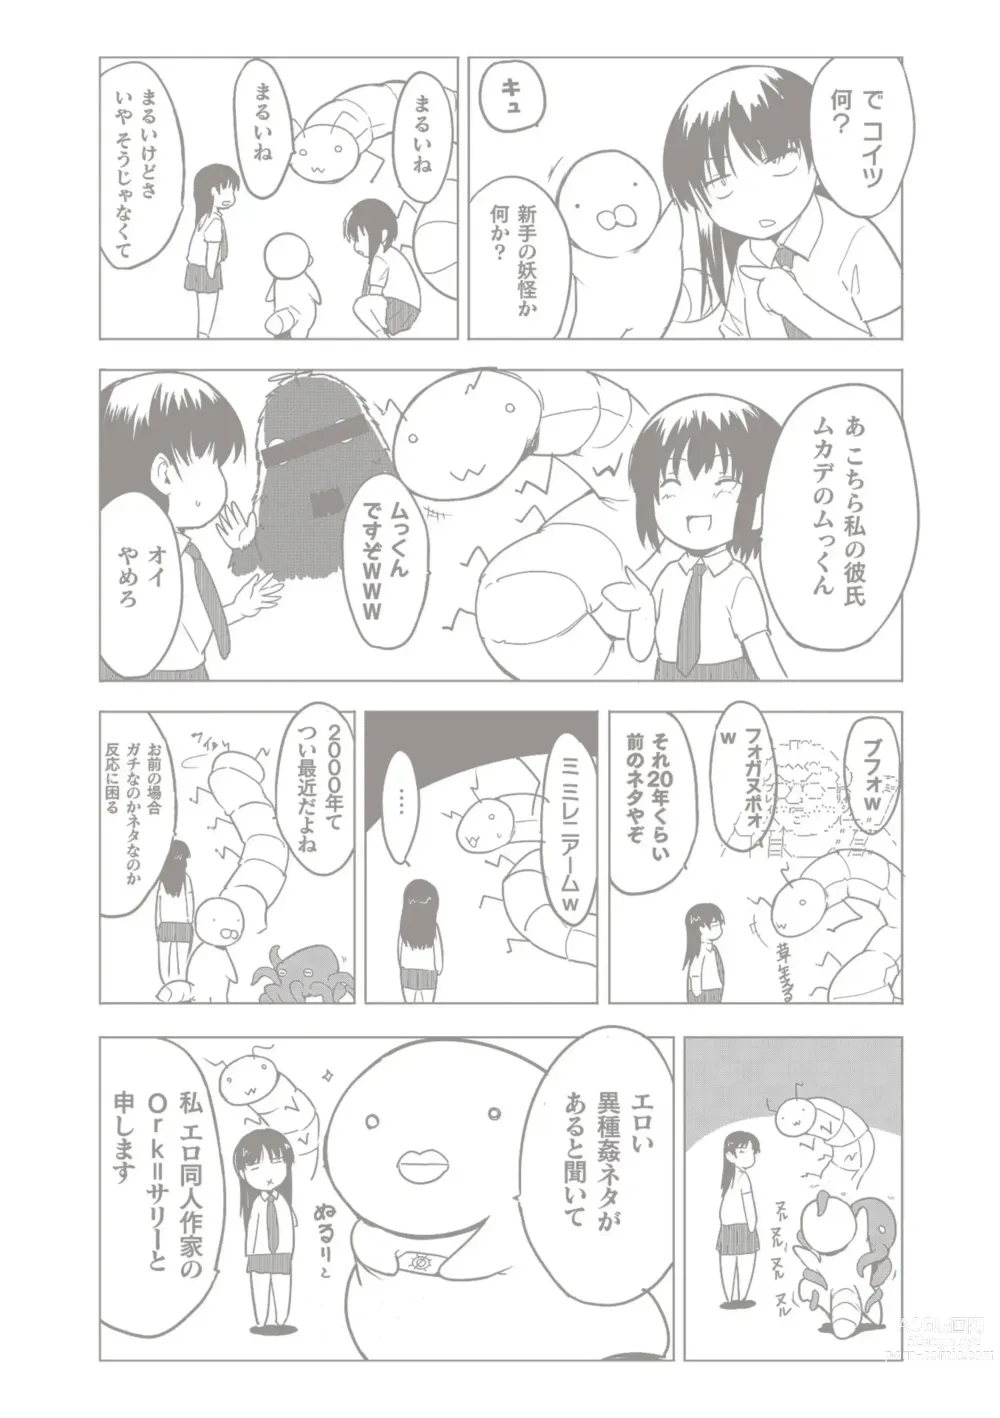 Page 181 of manga 준간 괴기요괴소녀능욕